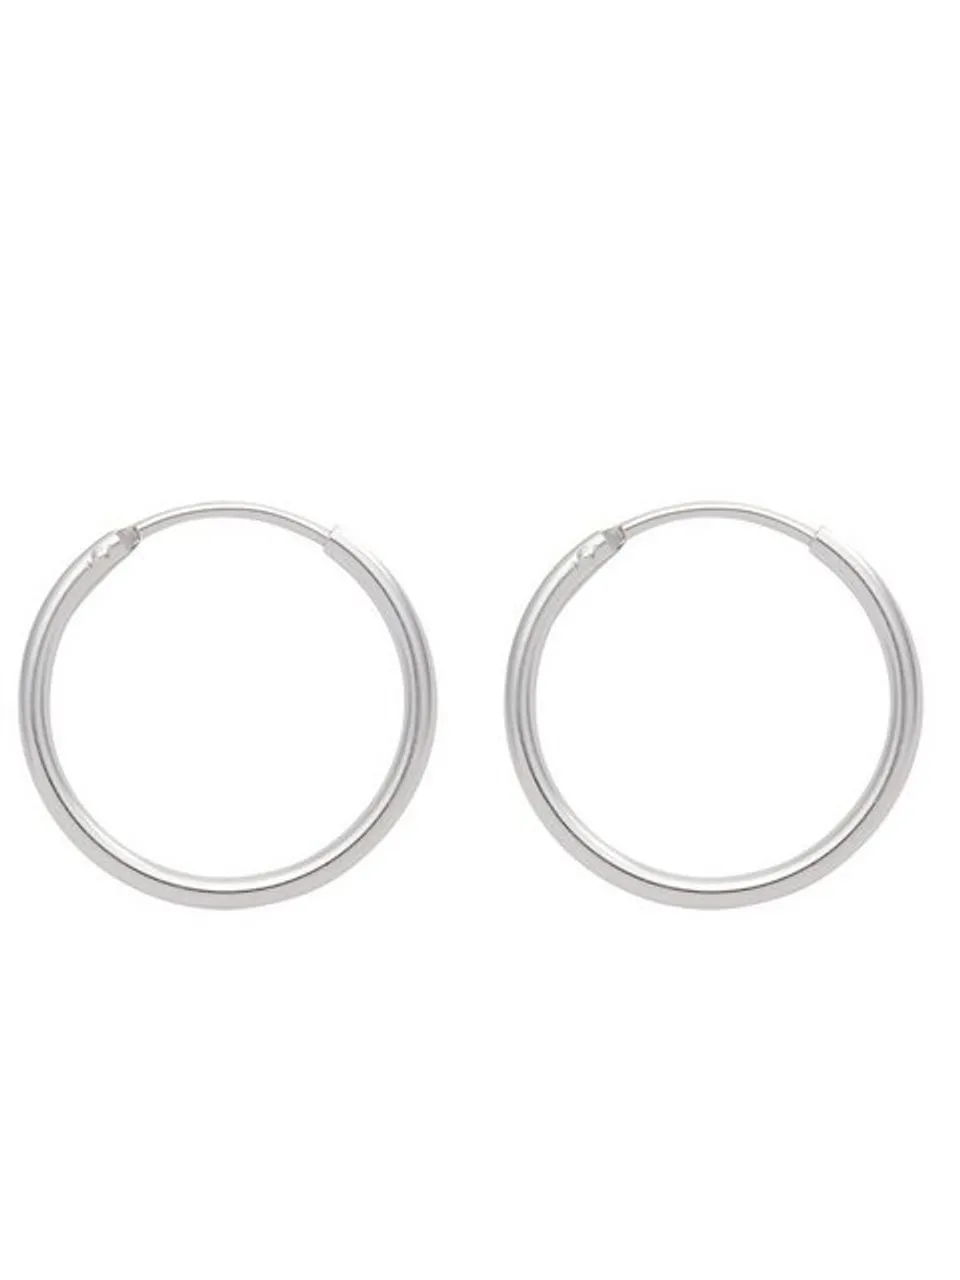 Adelia´s Paar Ohrhänger 925 Silber Ohrringe Creolen Ø 44 mm, Silberschmuck für Damen